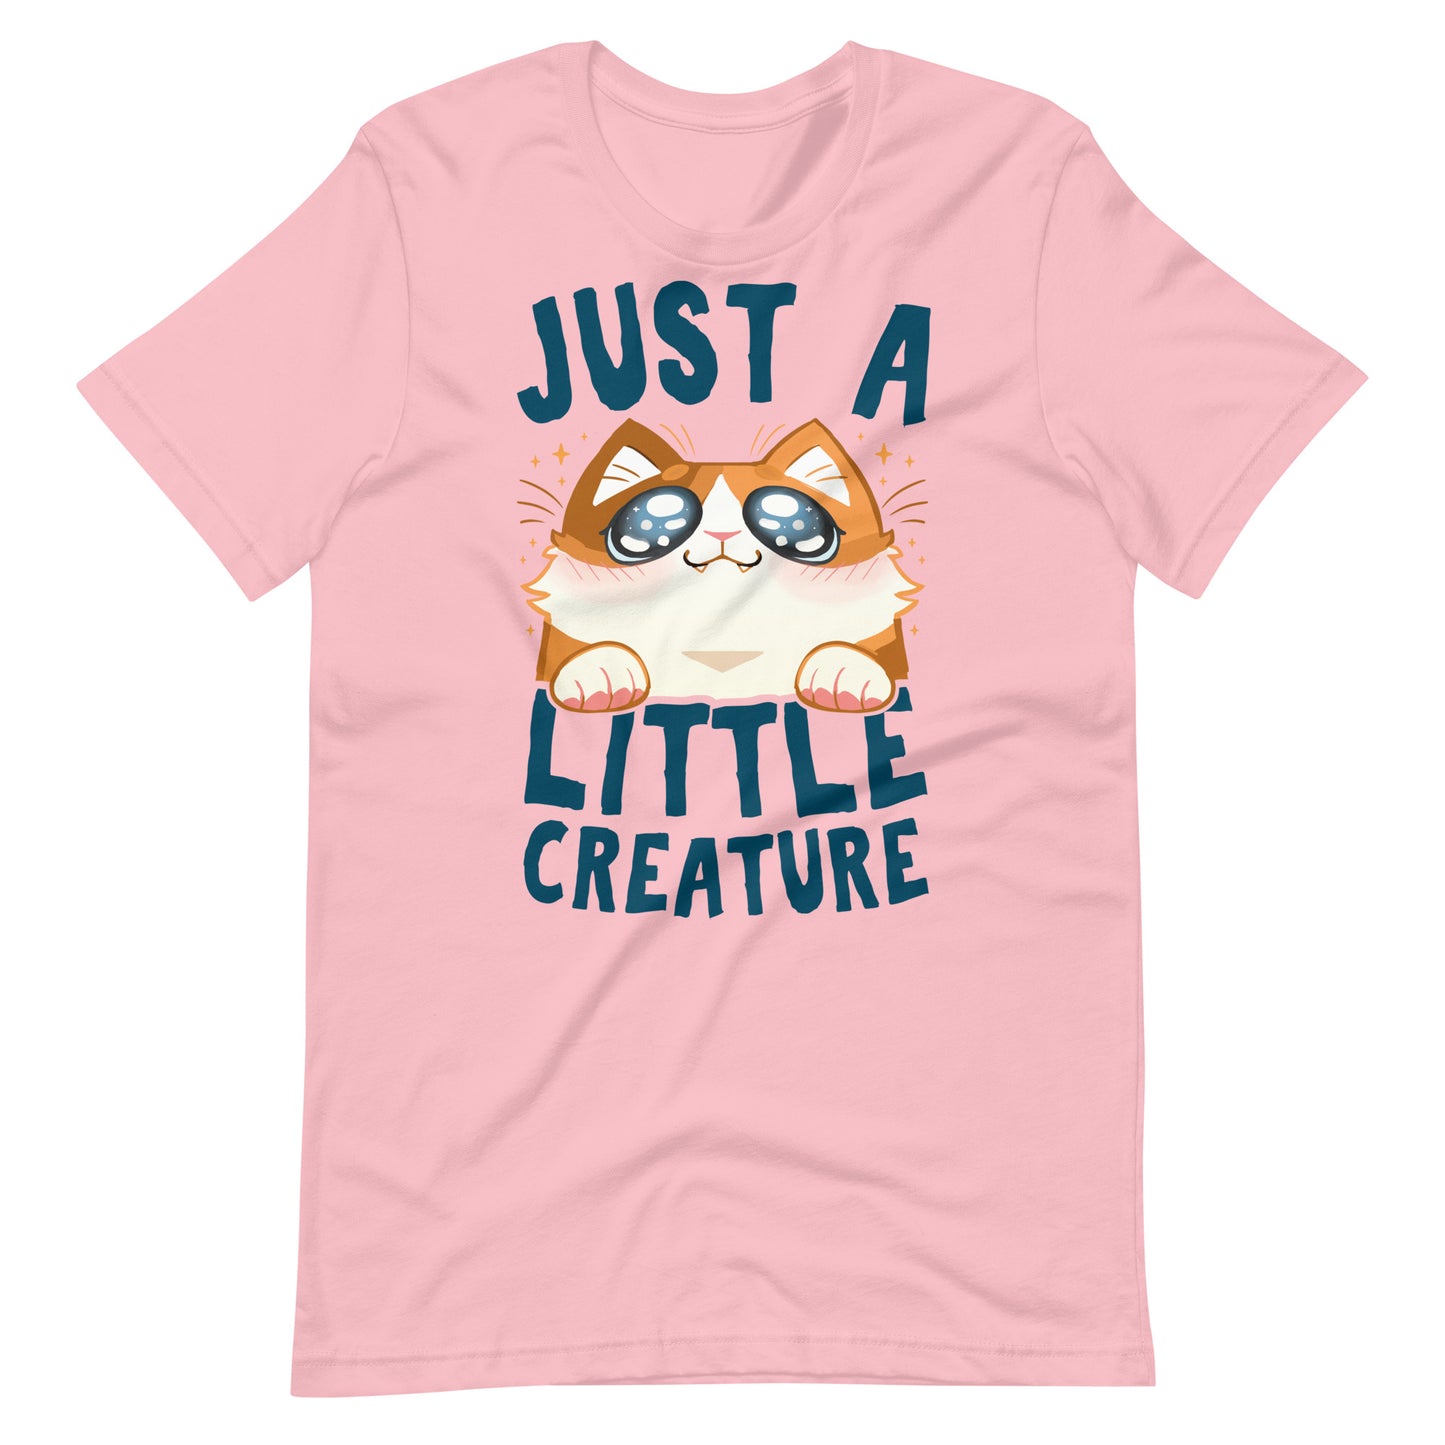 Just a Little Creature Unisex T-Shirt by The Shirt Hoard